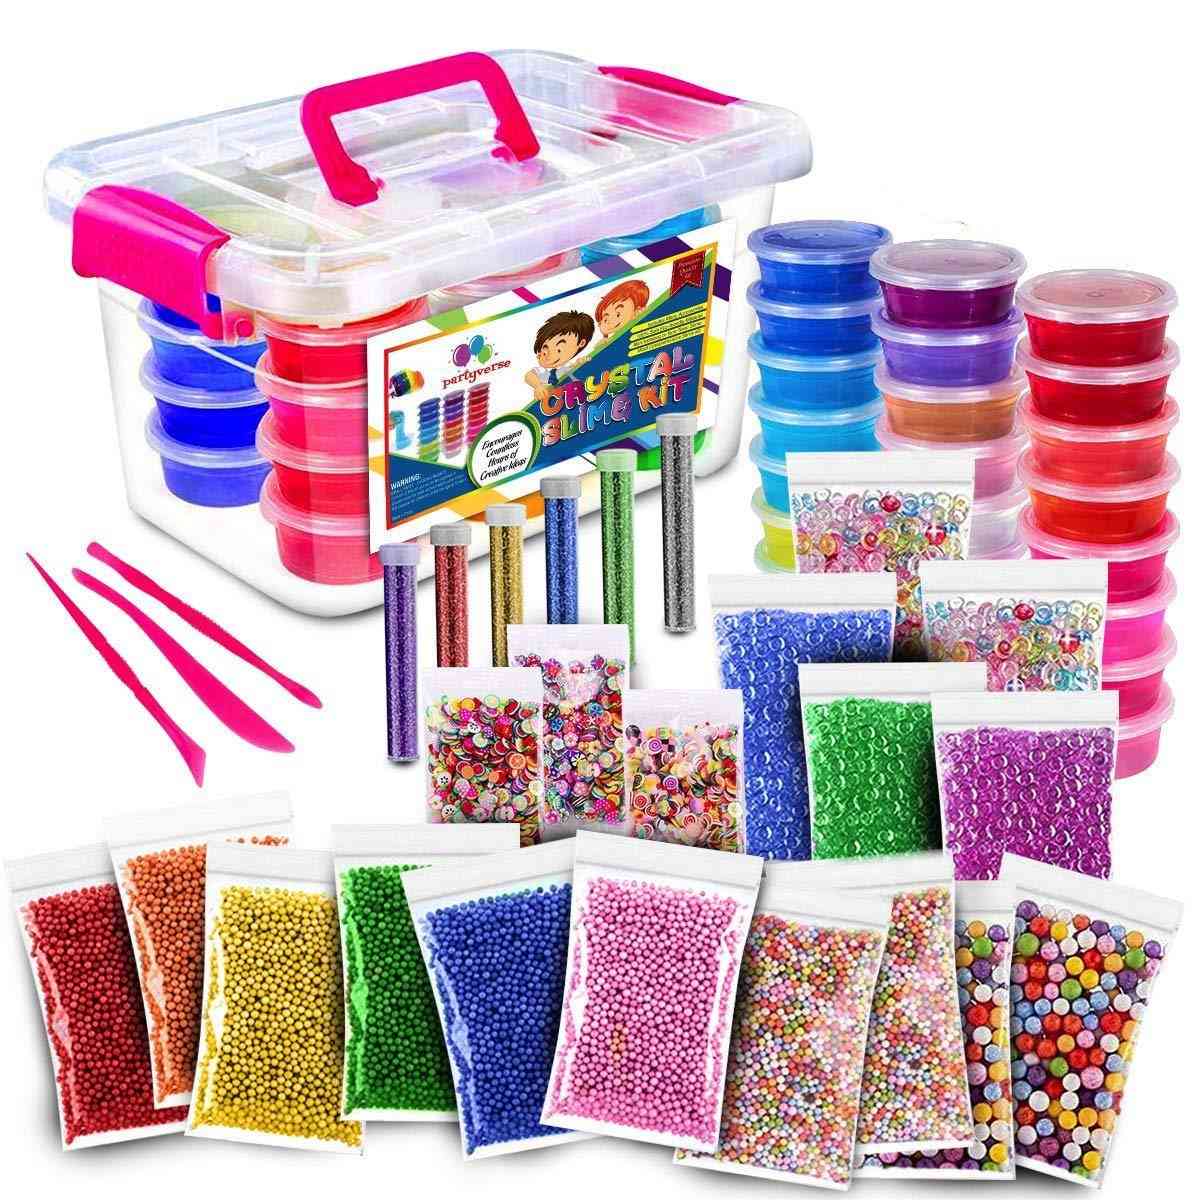 Fluffy Slime Kit 24 Color Slime Supplies For Kids Diy Kit